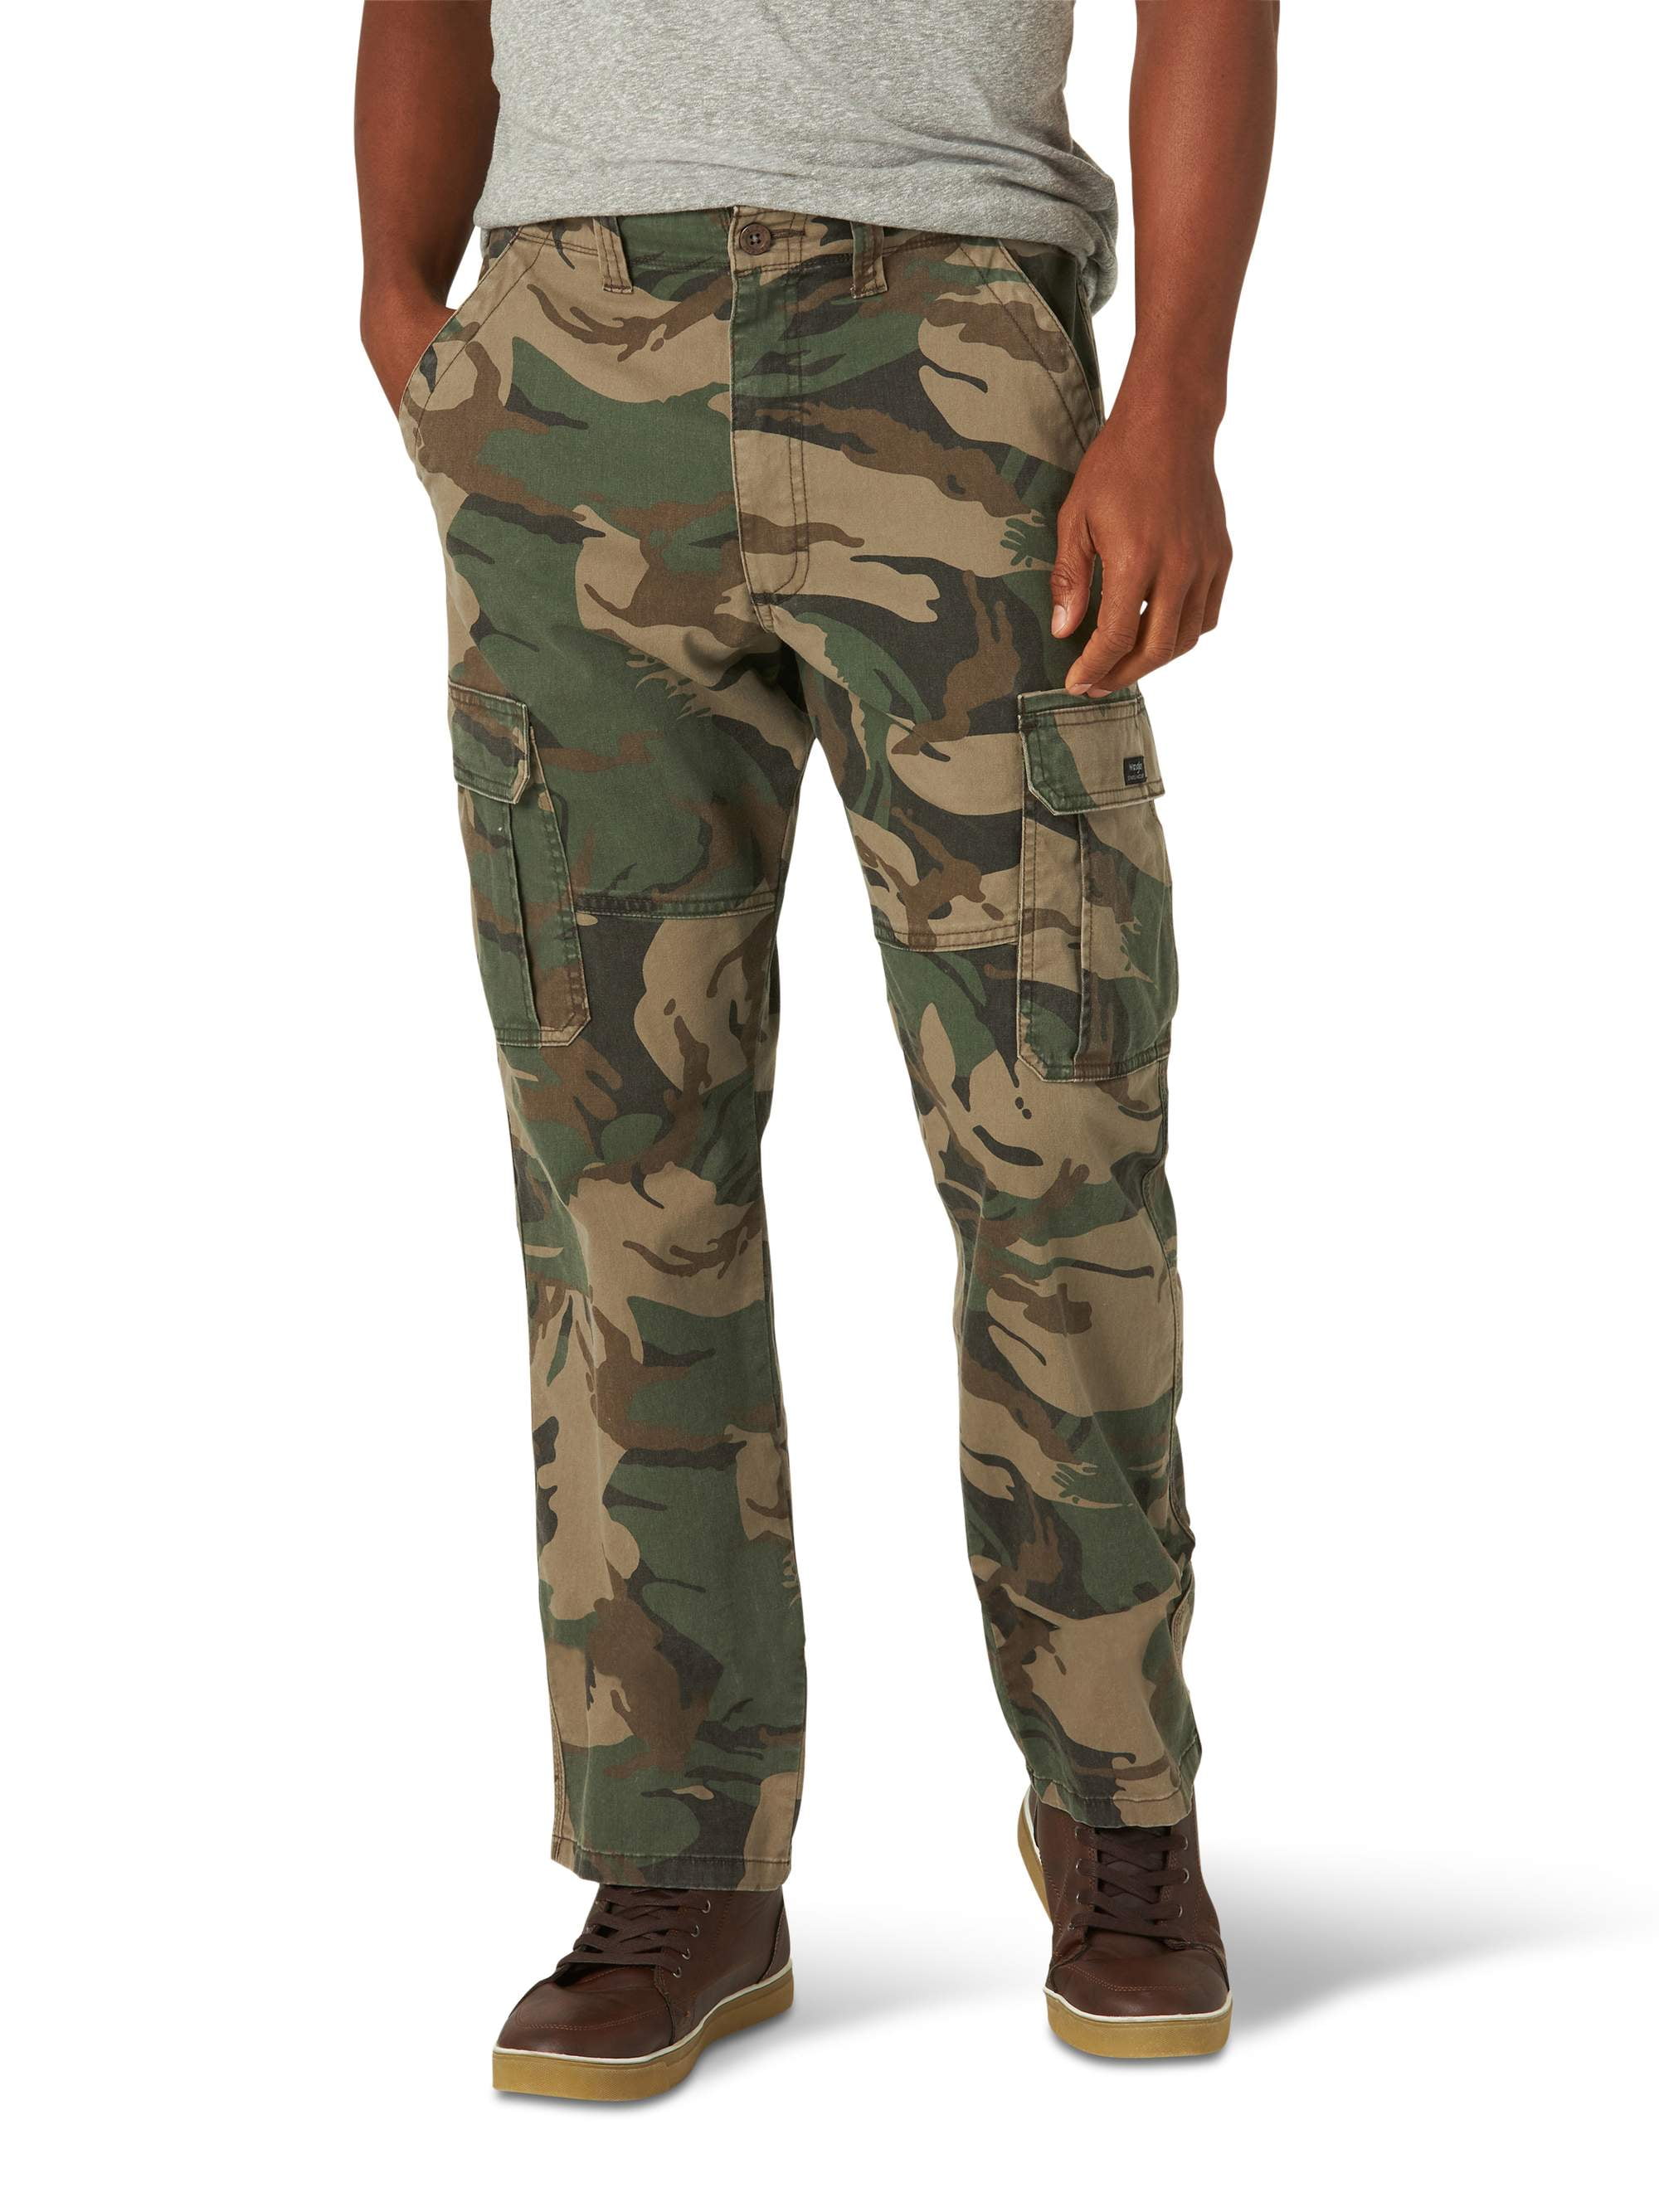 UK Men Cargo Camo Combat Military Trousers Pants Camouflage Slacks Casual D1 